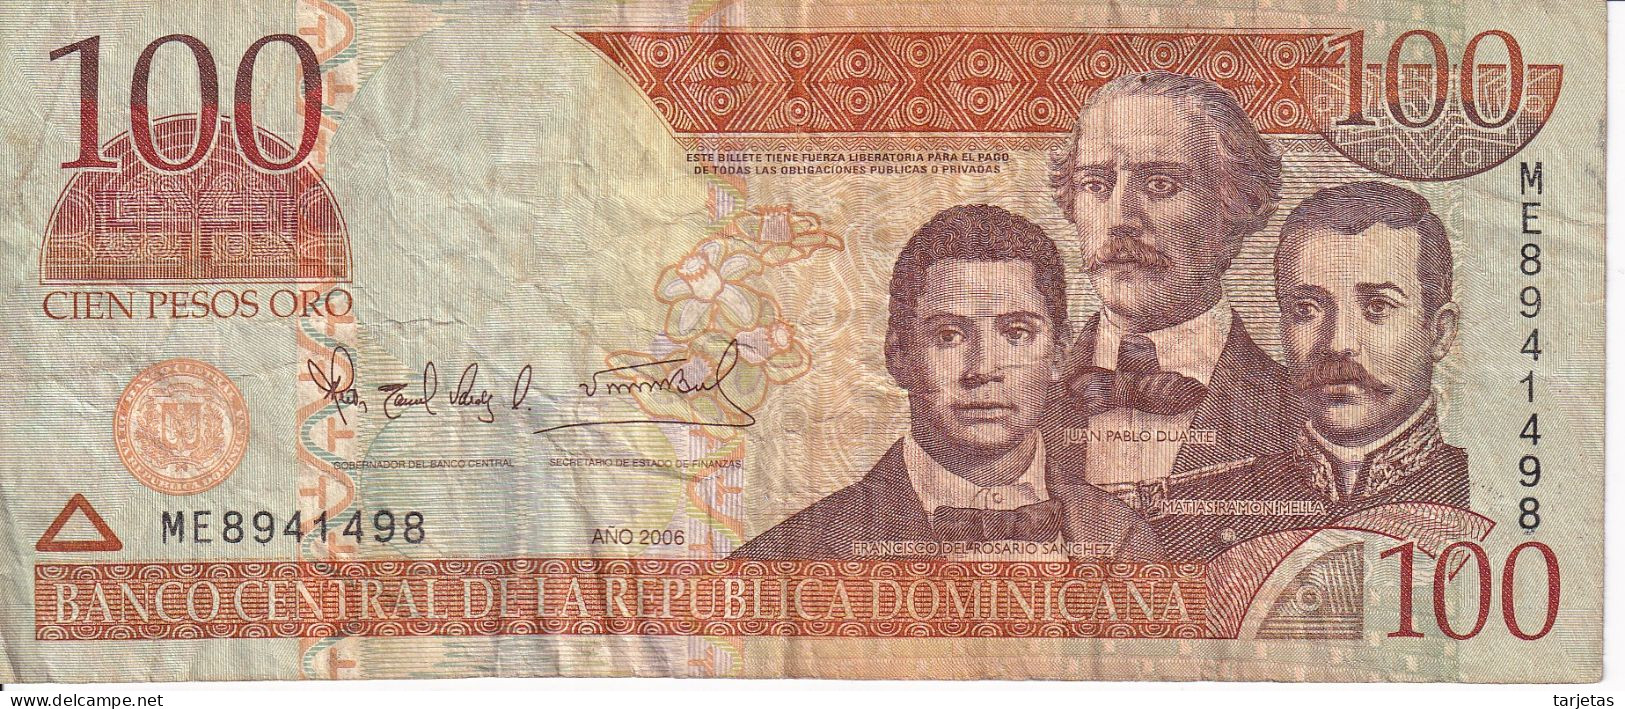 ¡CAPICUA! BILLETE DE REP. DOMINICANA DE 100 PESOS ORO DEL AÑO 2006 Nº 8941498 (BANKNOTE) - Dominicana